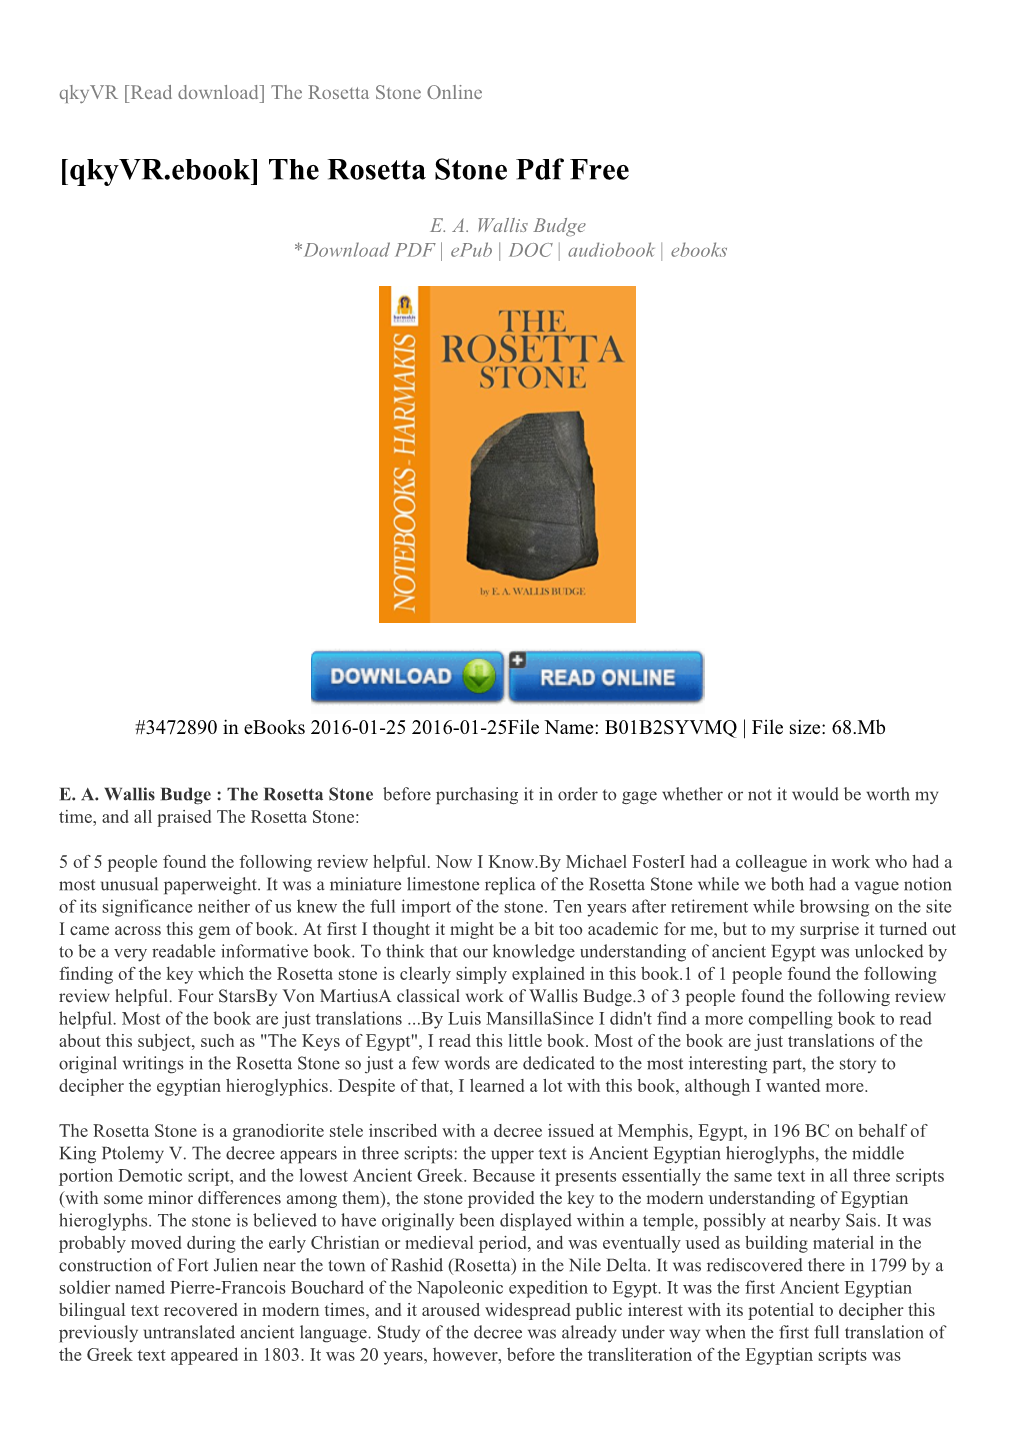 The Rosetta Stone Online